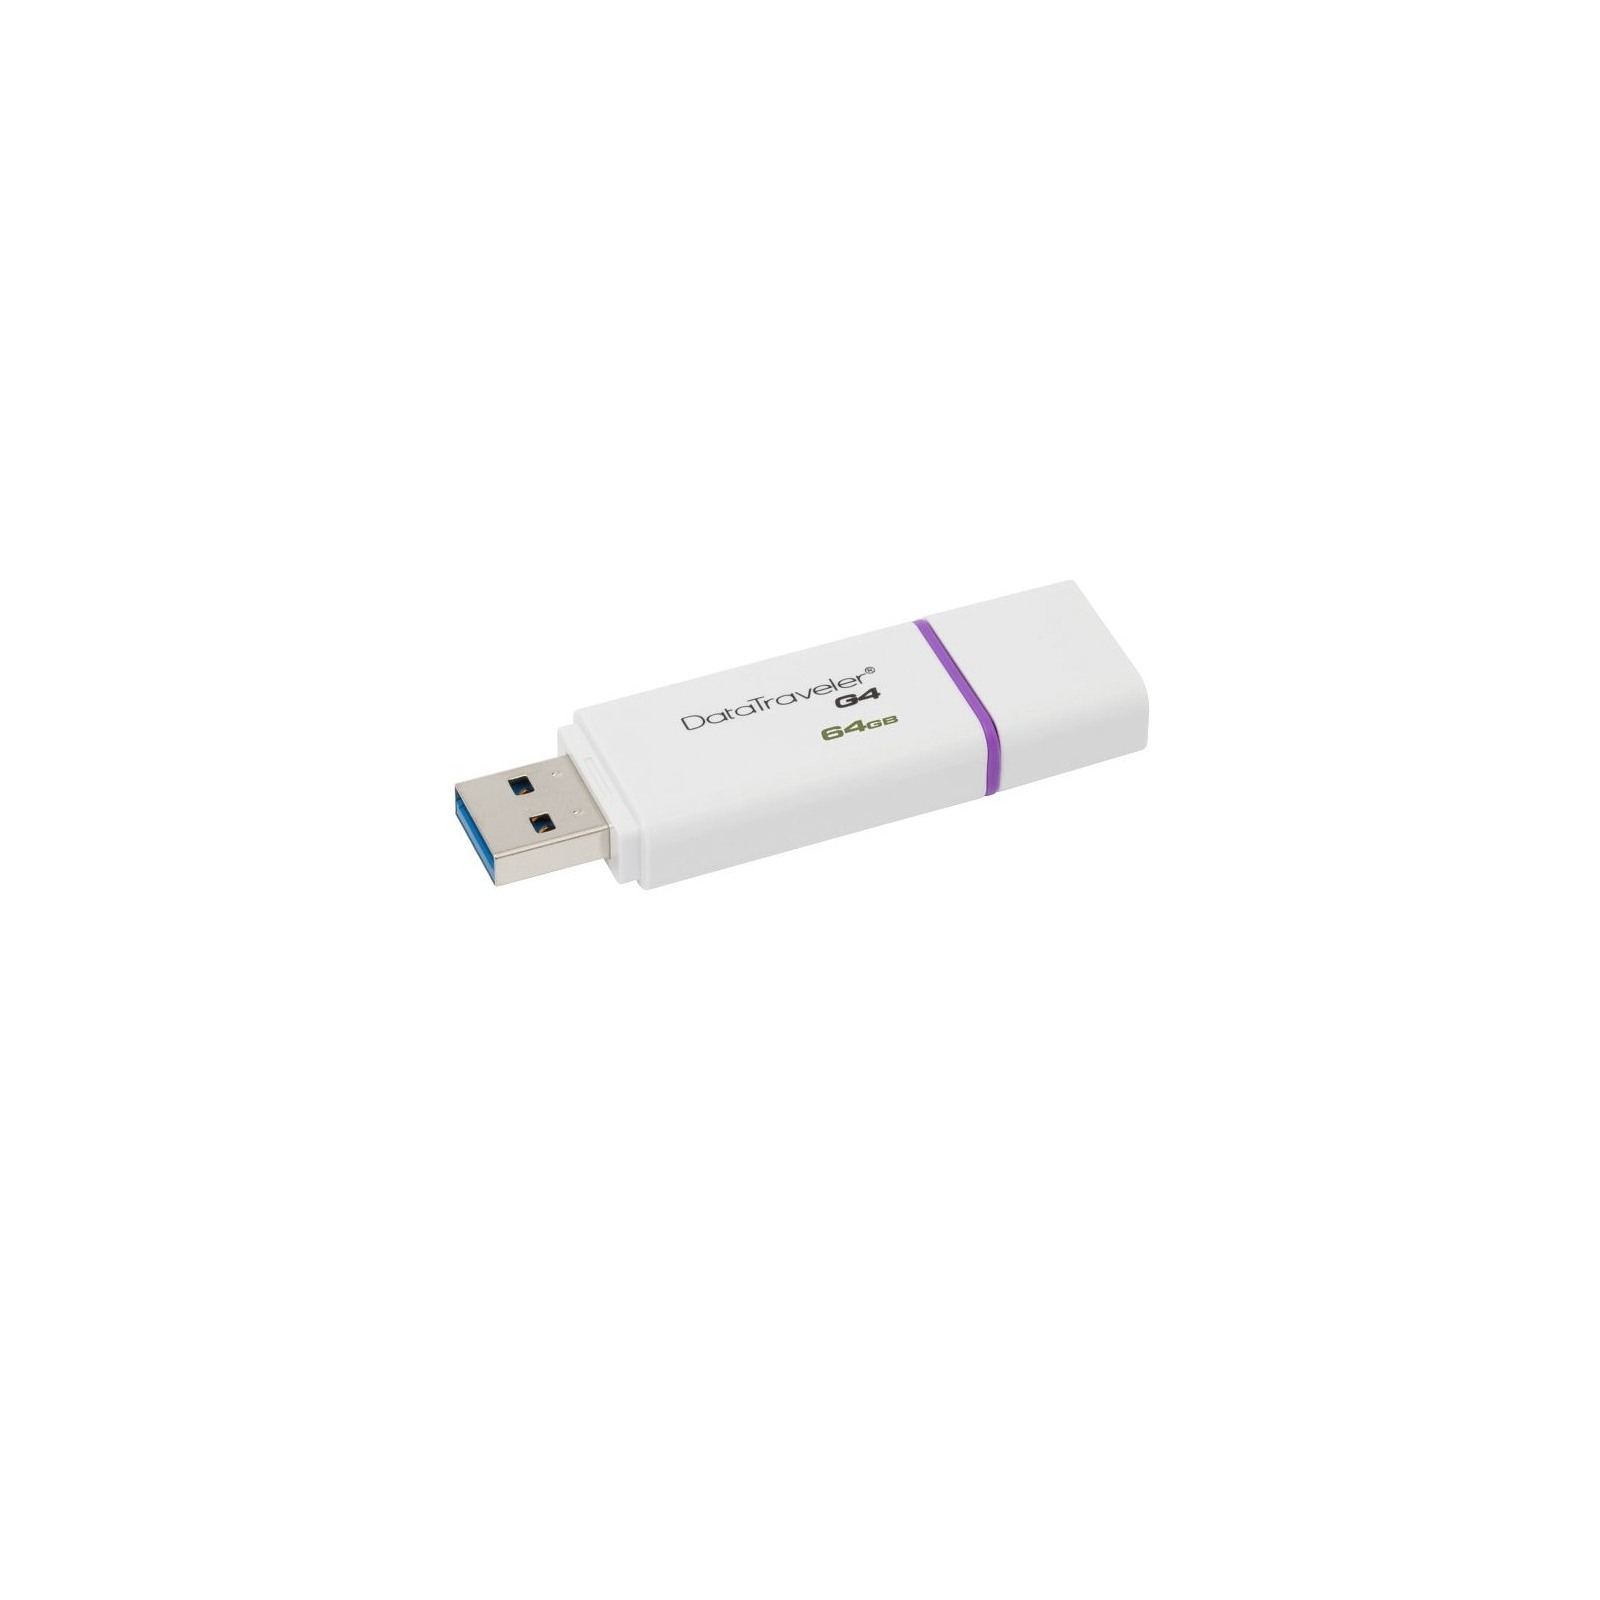 USB флеш накопитель Kingston 8Gb DataTraveler Generation 4 (DTIG4/8GB)